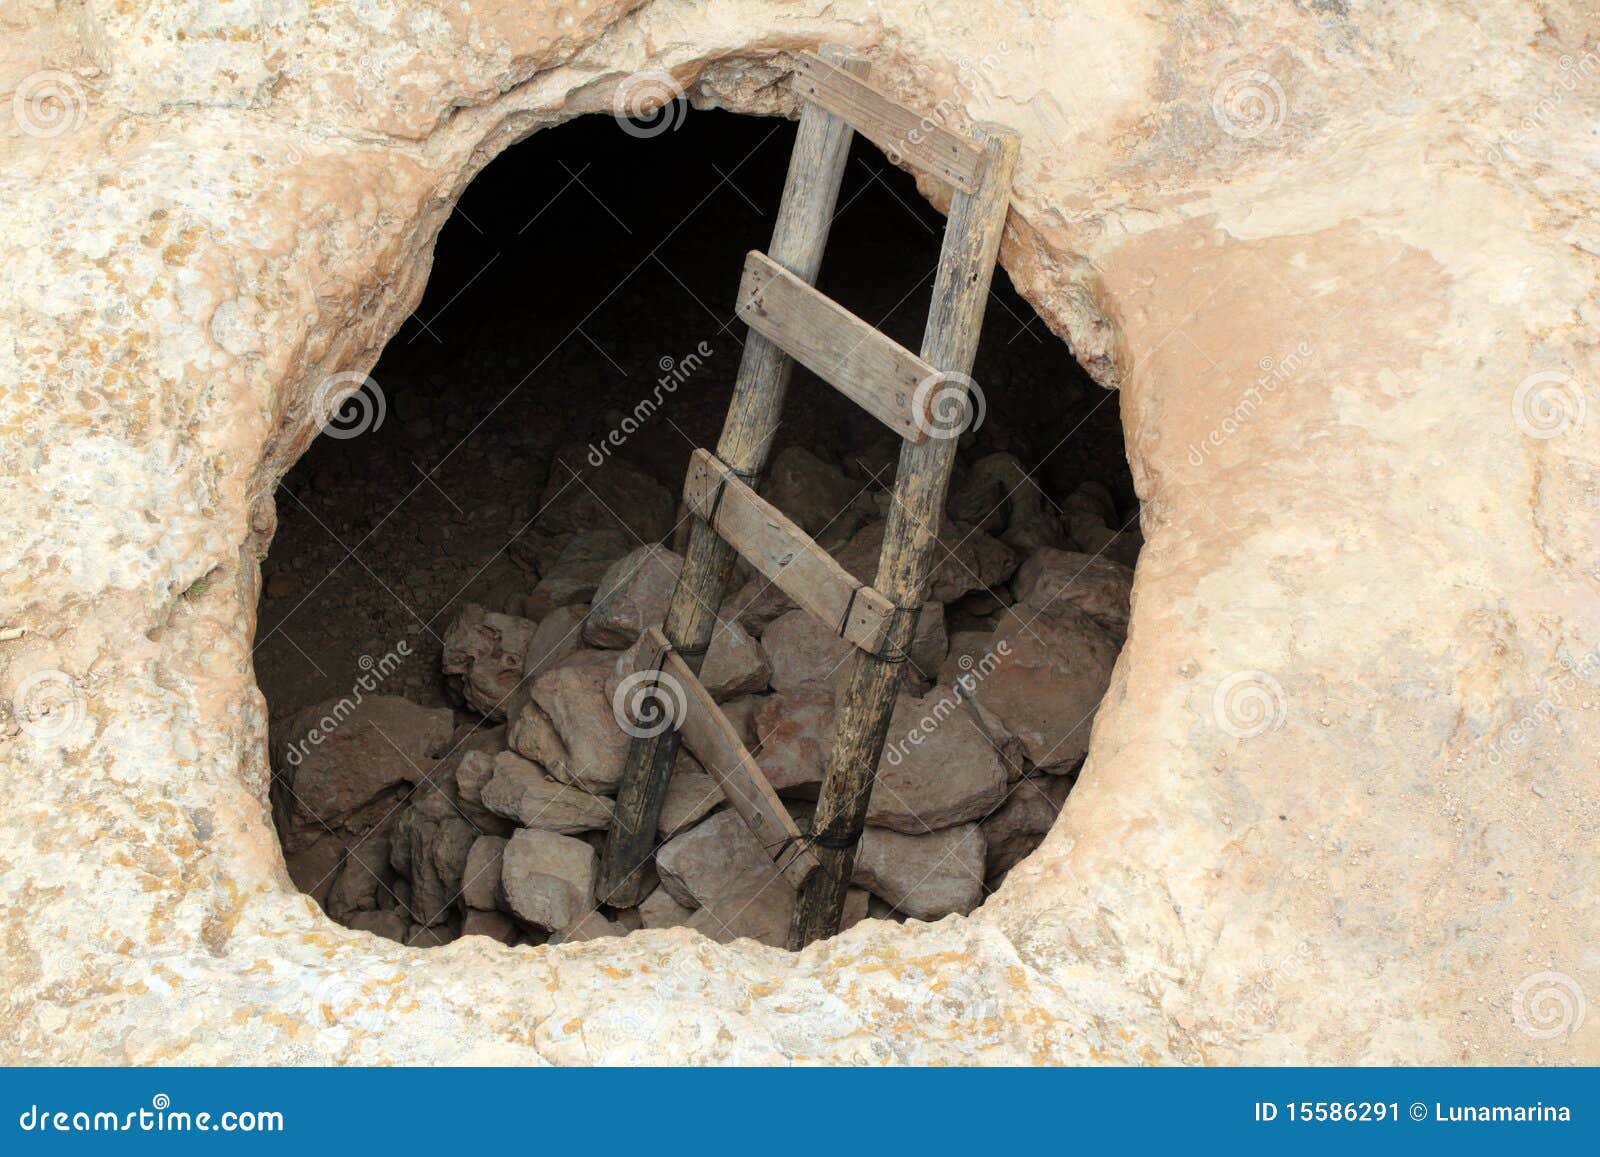 barbaria cape cave hole aged wood steps